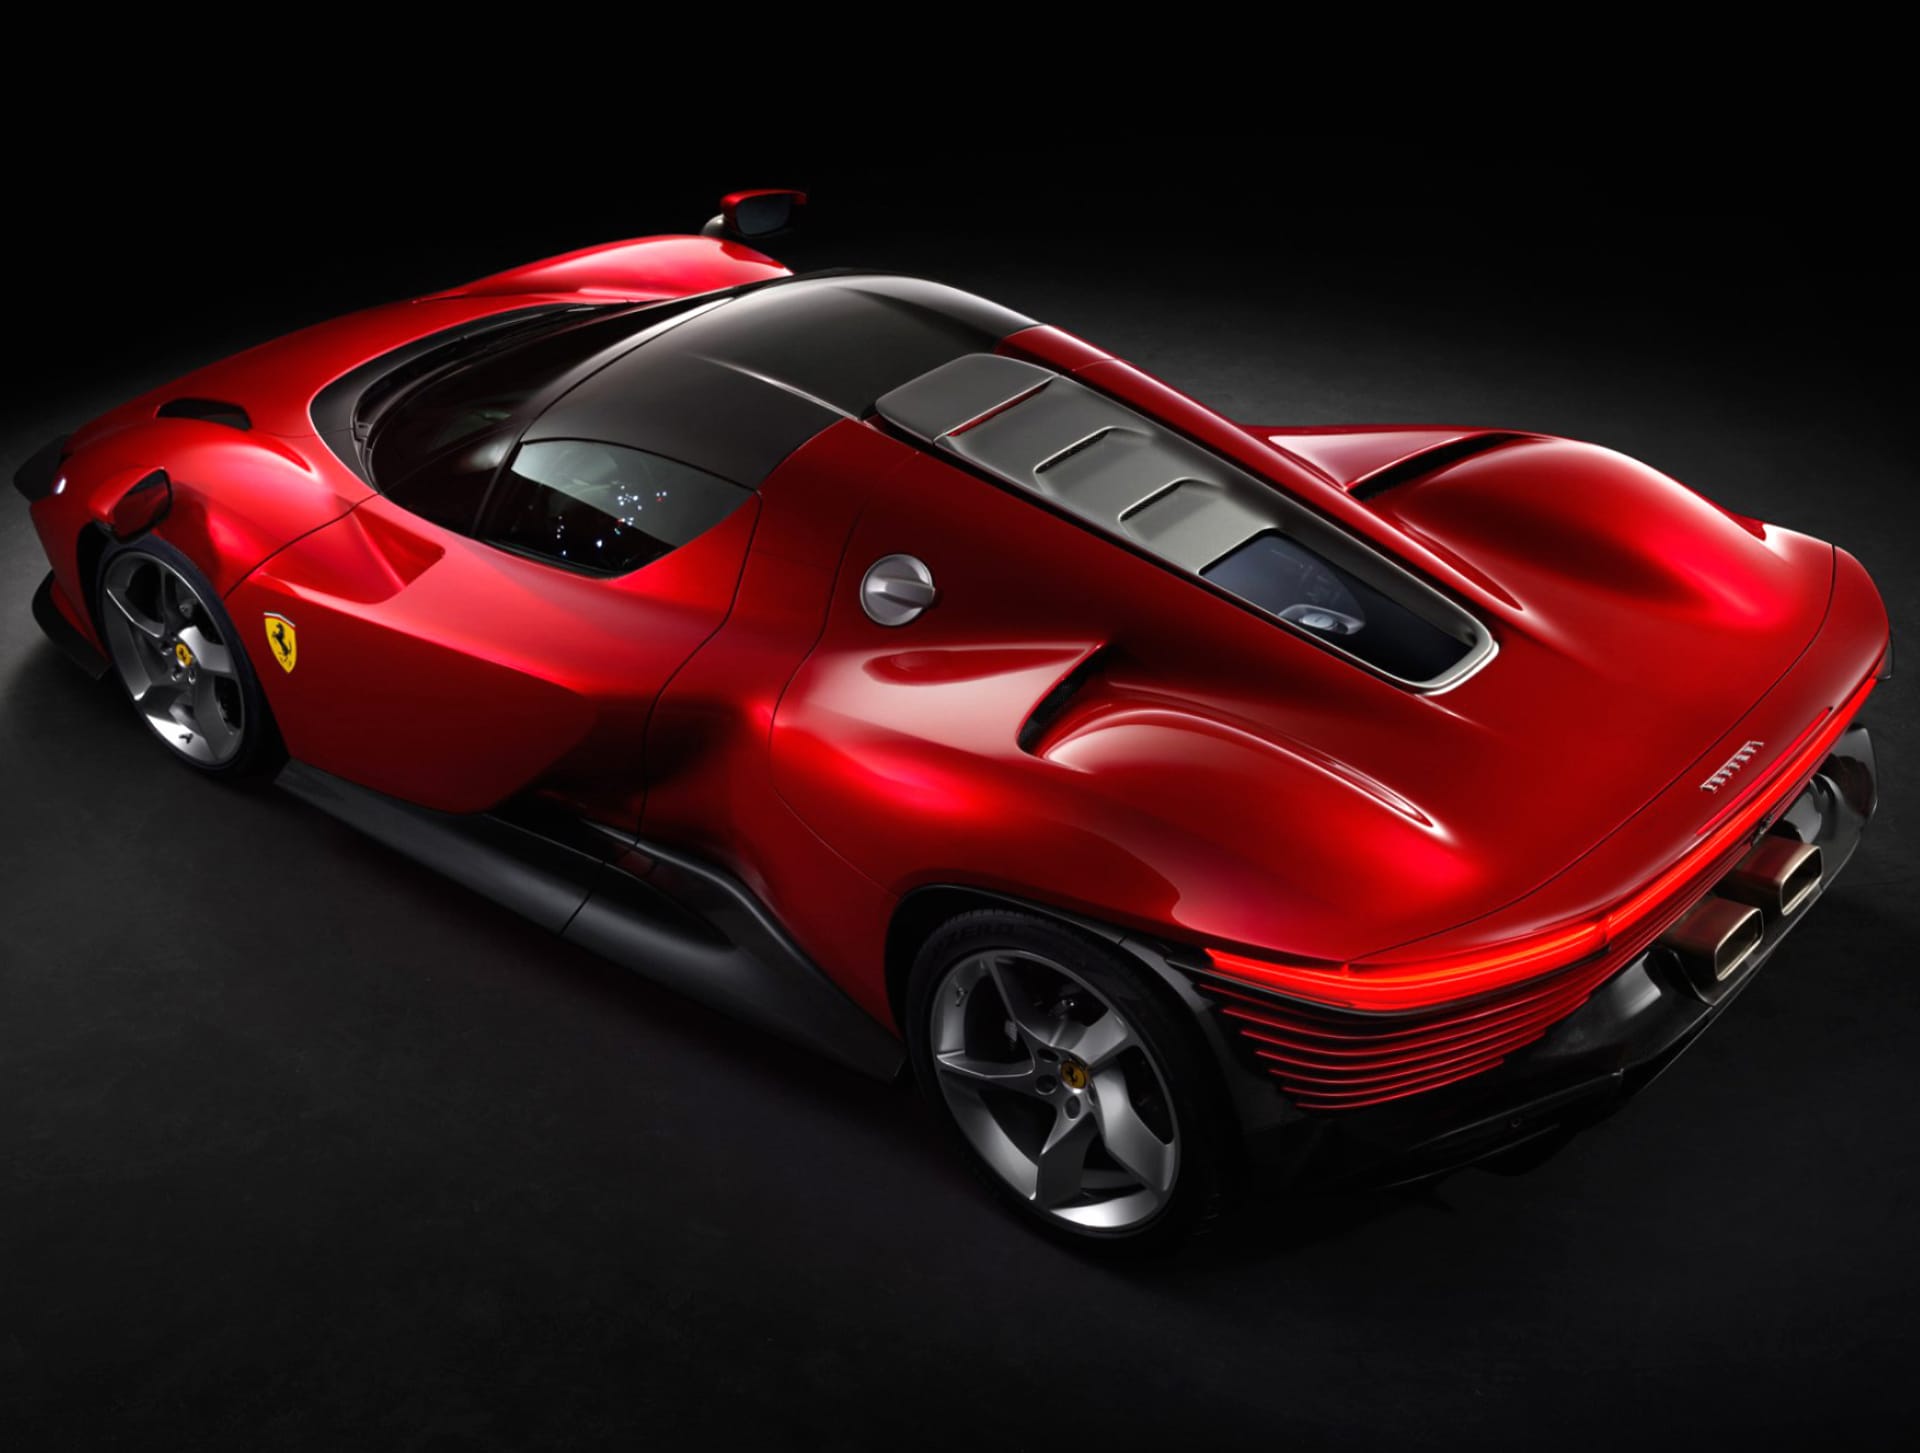 Ferrari Daytona SP3 at 1600 x 1200 size wallpapers HD quality